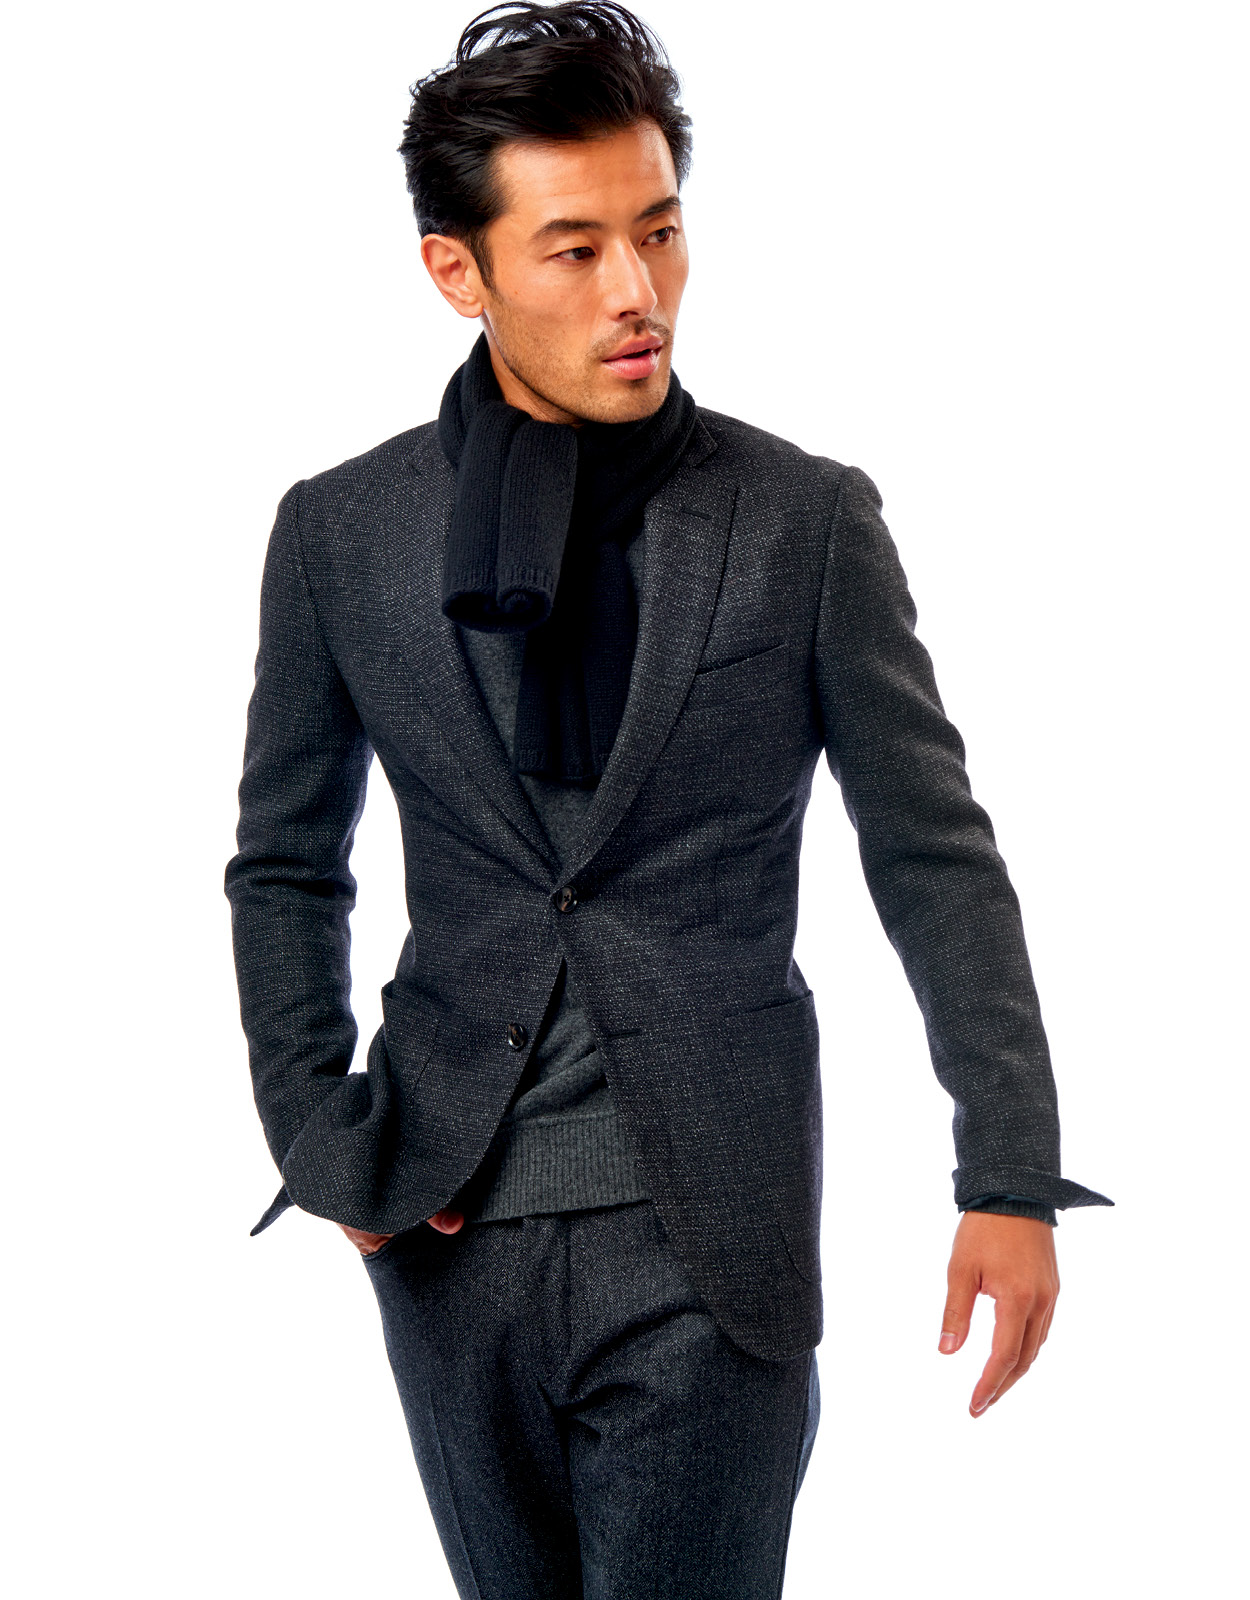 grey-tonal-suit